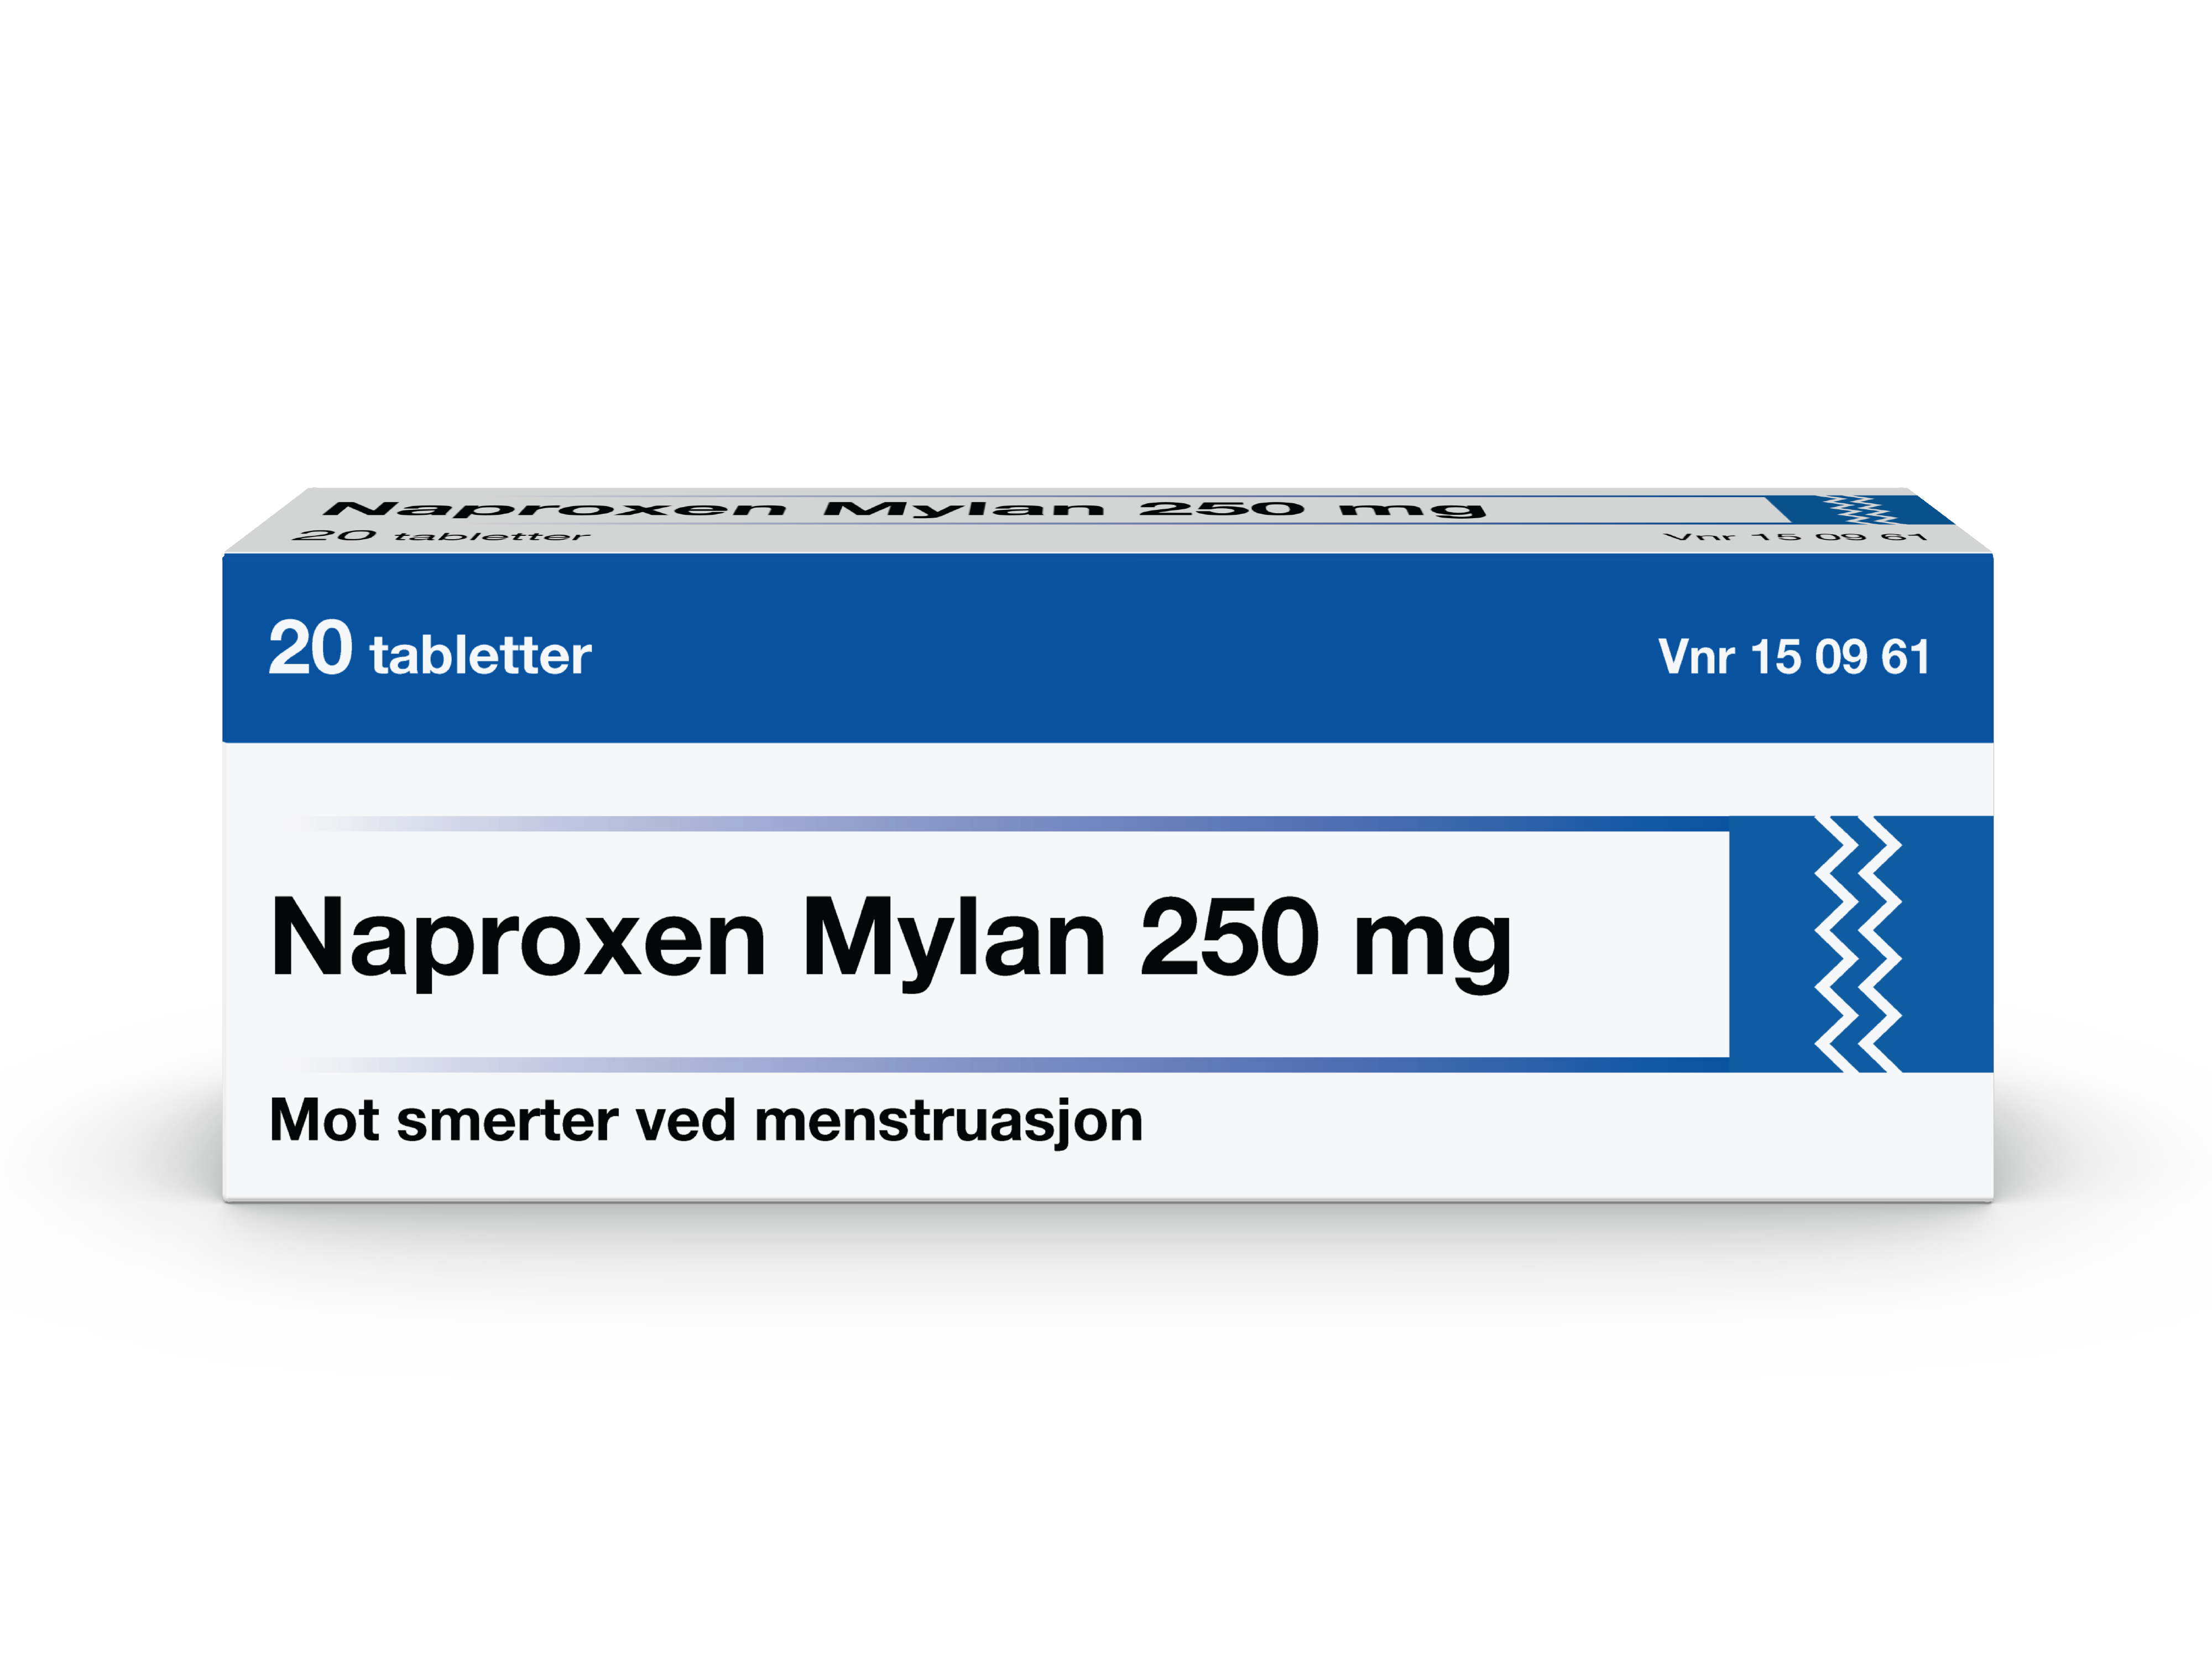 Naproxen Tabletter 250 mg, 20 stk. på brett